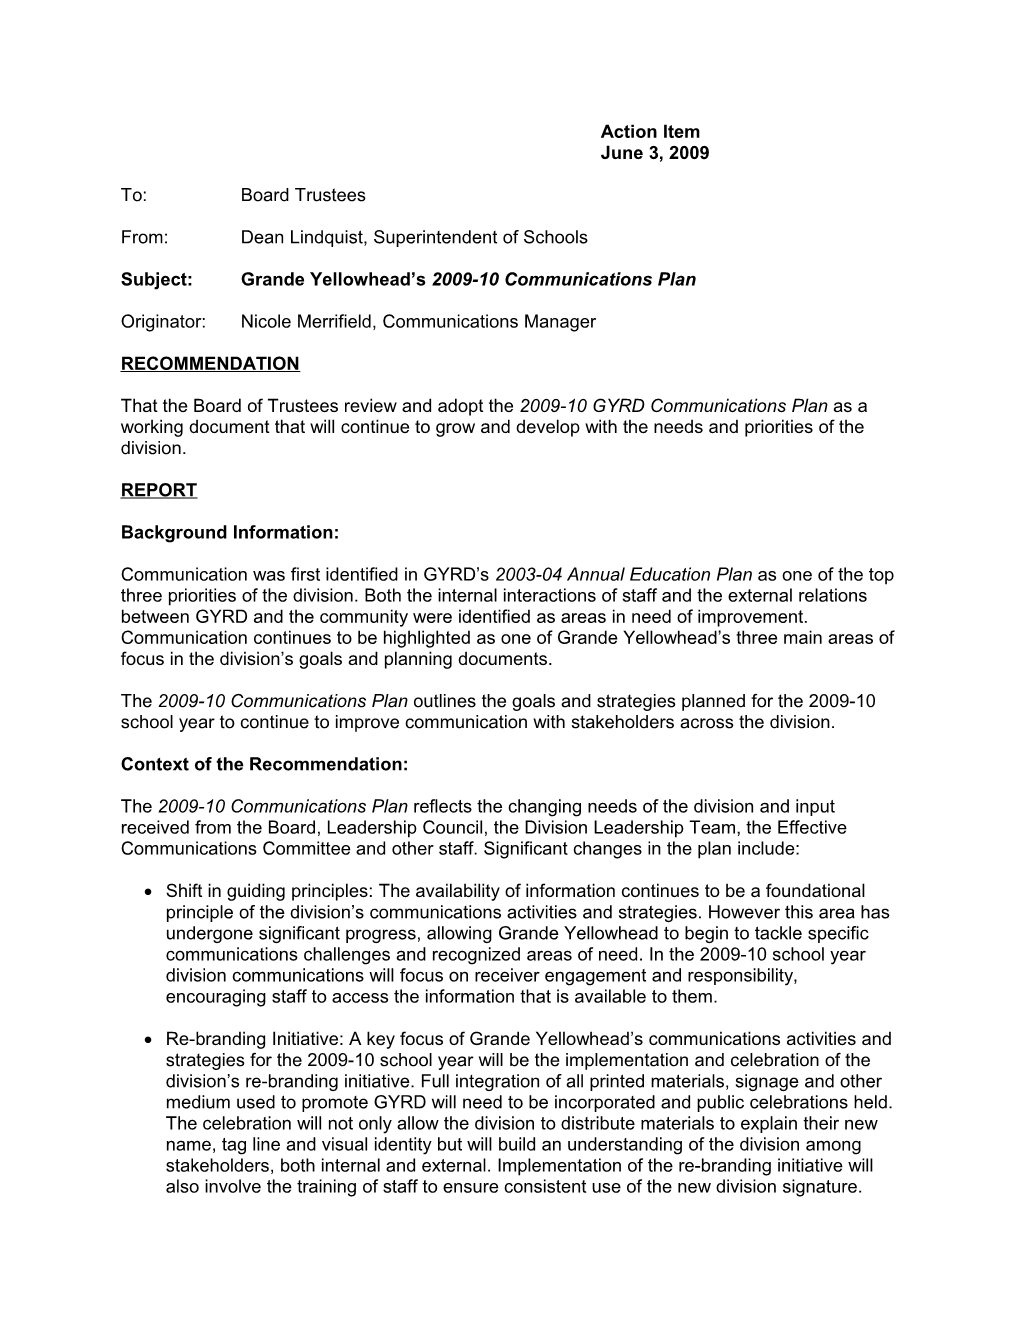 Subject: Grande Yellowhead S2009-10 Communications Plan